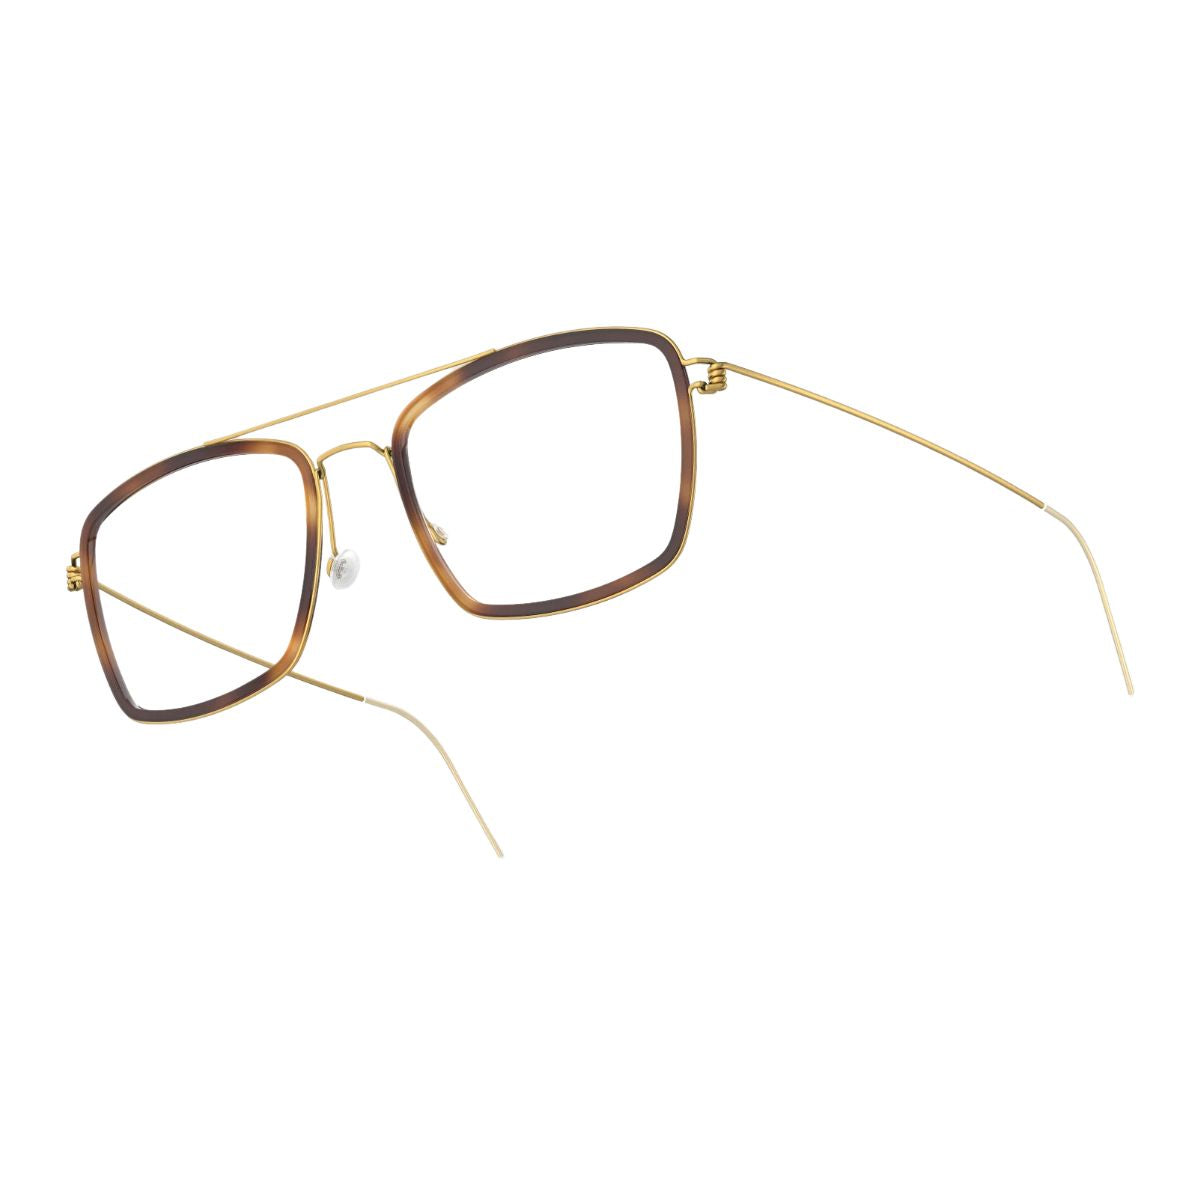 "Shop Latest Lindberg Oscar Square Shape Optical Glasses for Men & Women At Optorium"